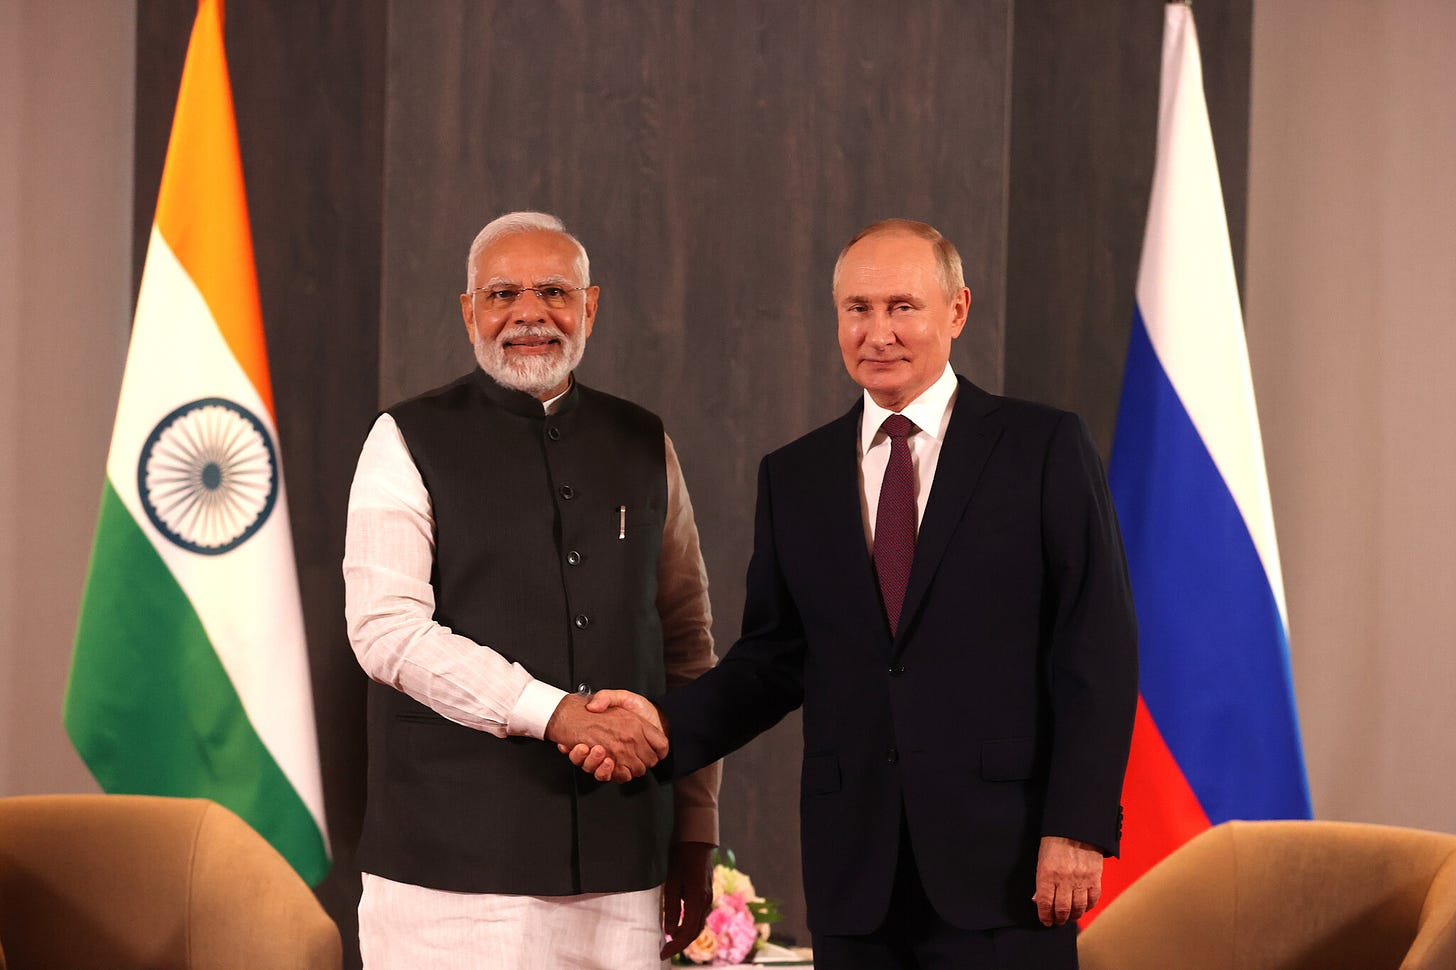 Indian Prime Minister Narendra Modi with Russian President Vladimir Putin on sidelines of the SCO Summit in Samarkand, Uzbekistan (Image: MEA India).